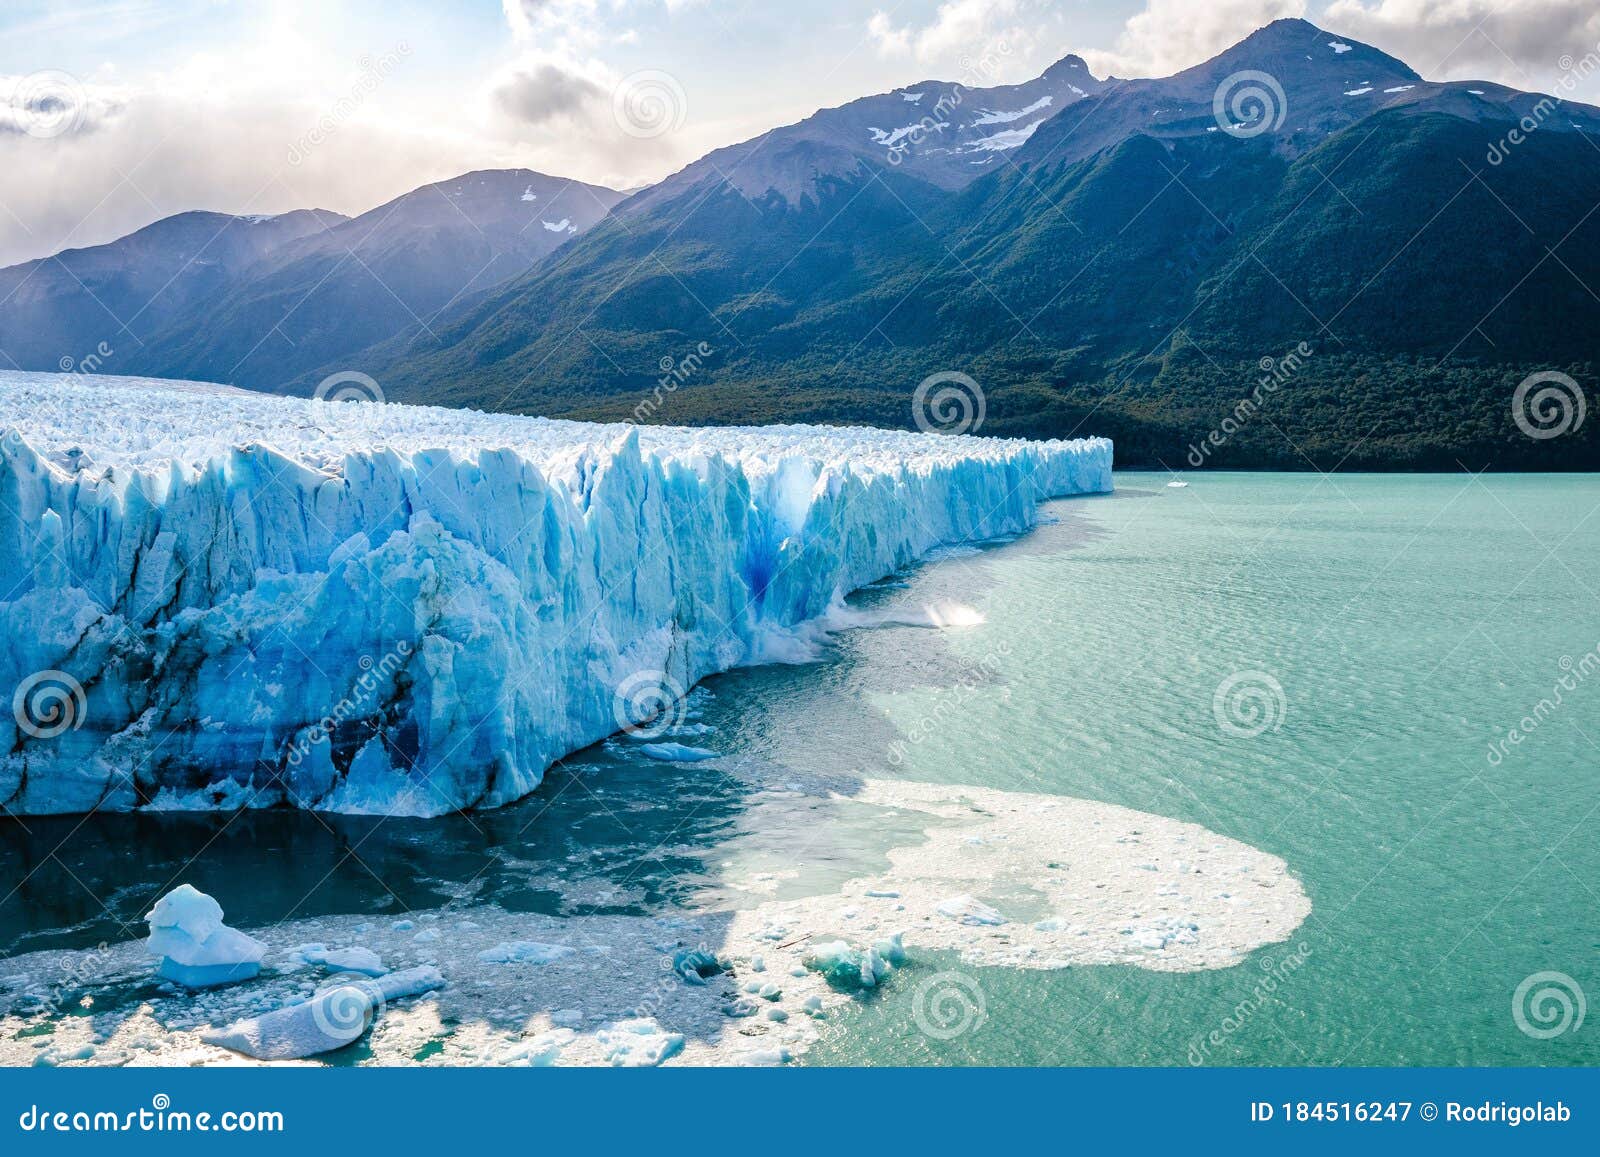 Moreno Glacier El Calafate, Patagonia Argentina, South America Stock Image - of blue: 184516247